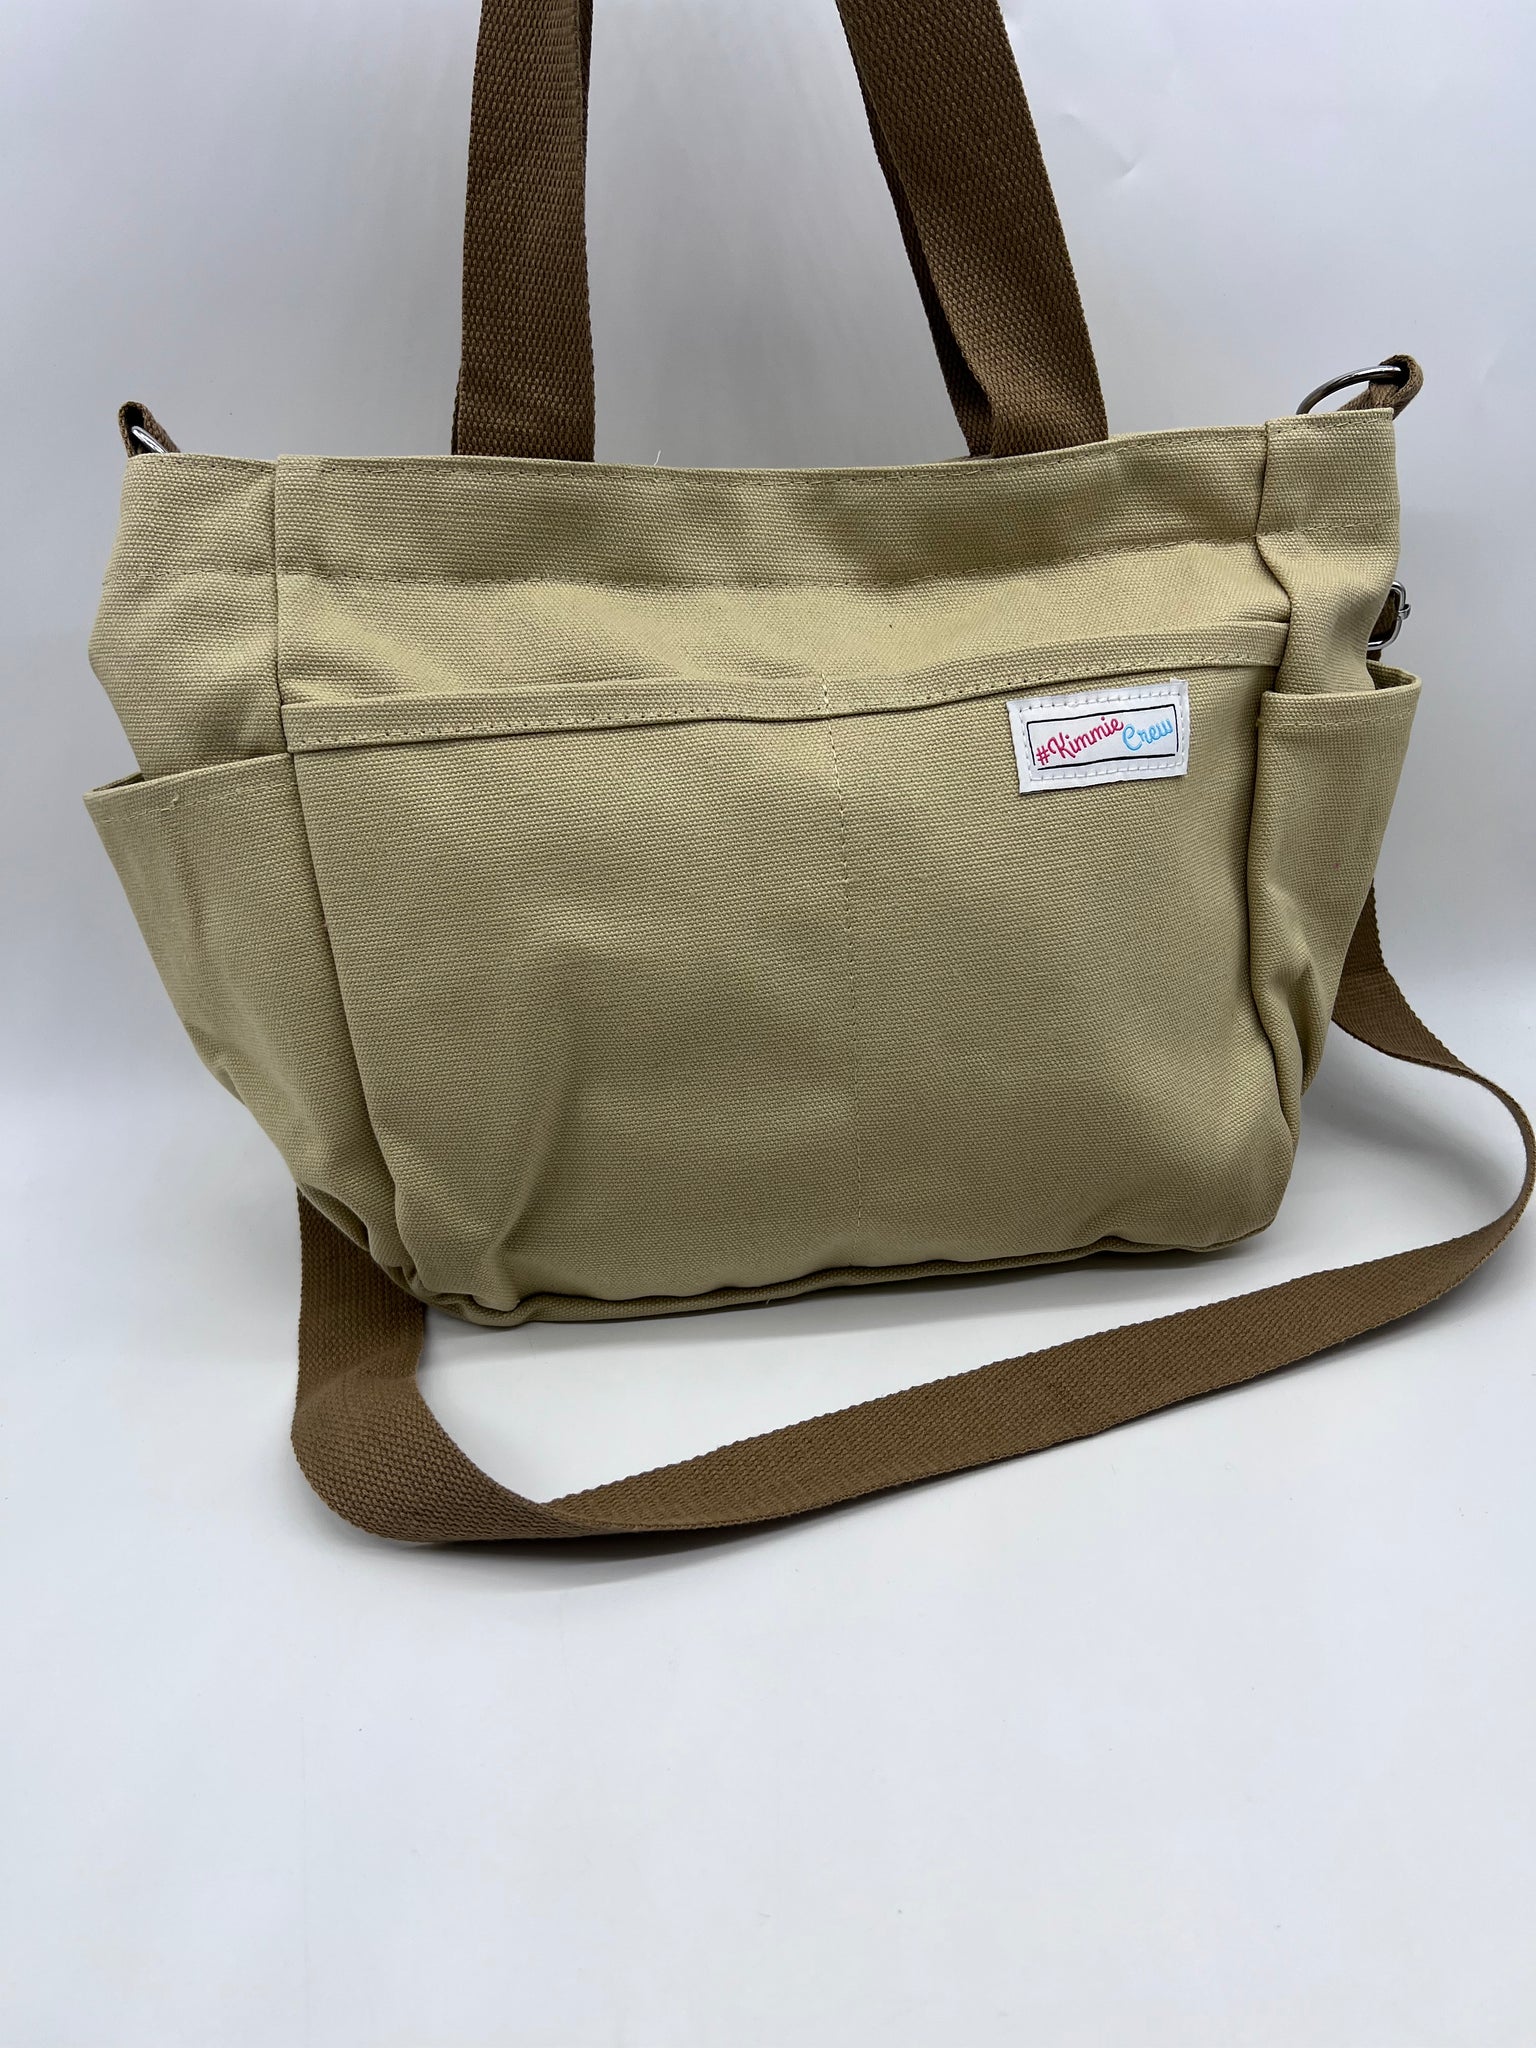 Kimmiebbags Canvas Messenger Bag - 3 Colors  090623 50% OFF